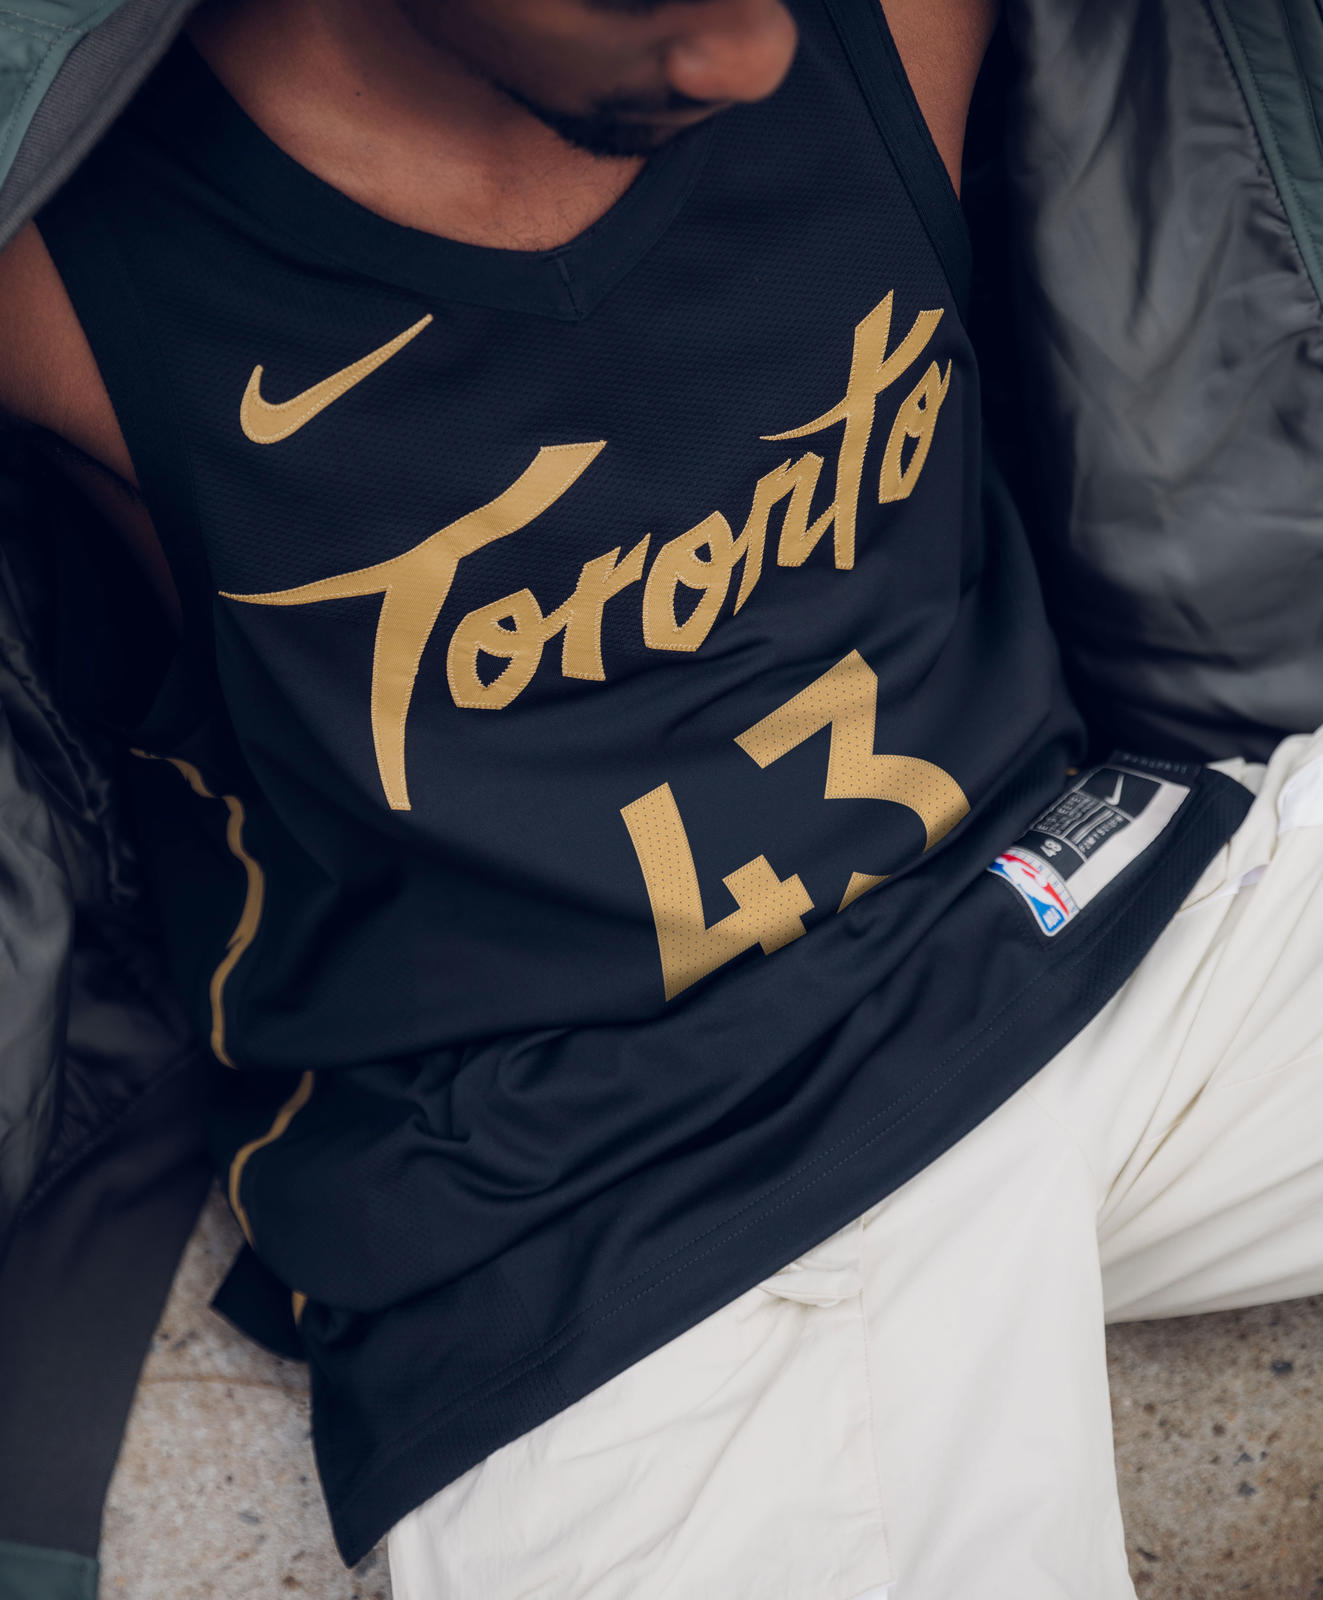 Nike Unveils 2019-20 NBA City Edition Jerseys (UPDATE)